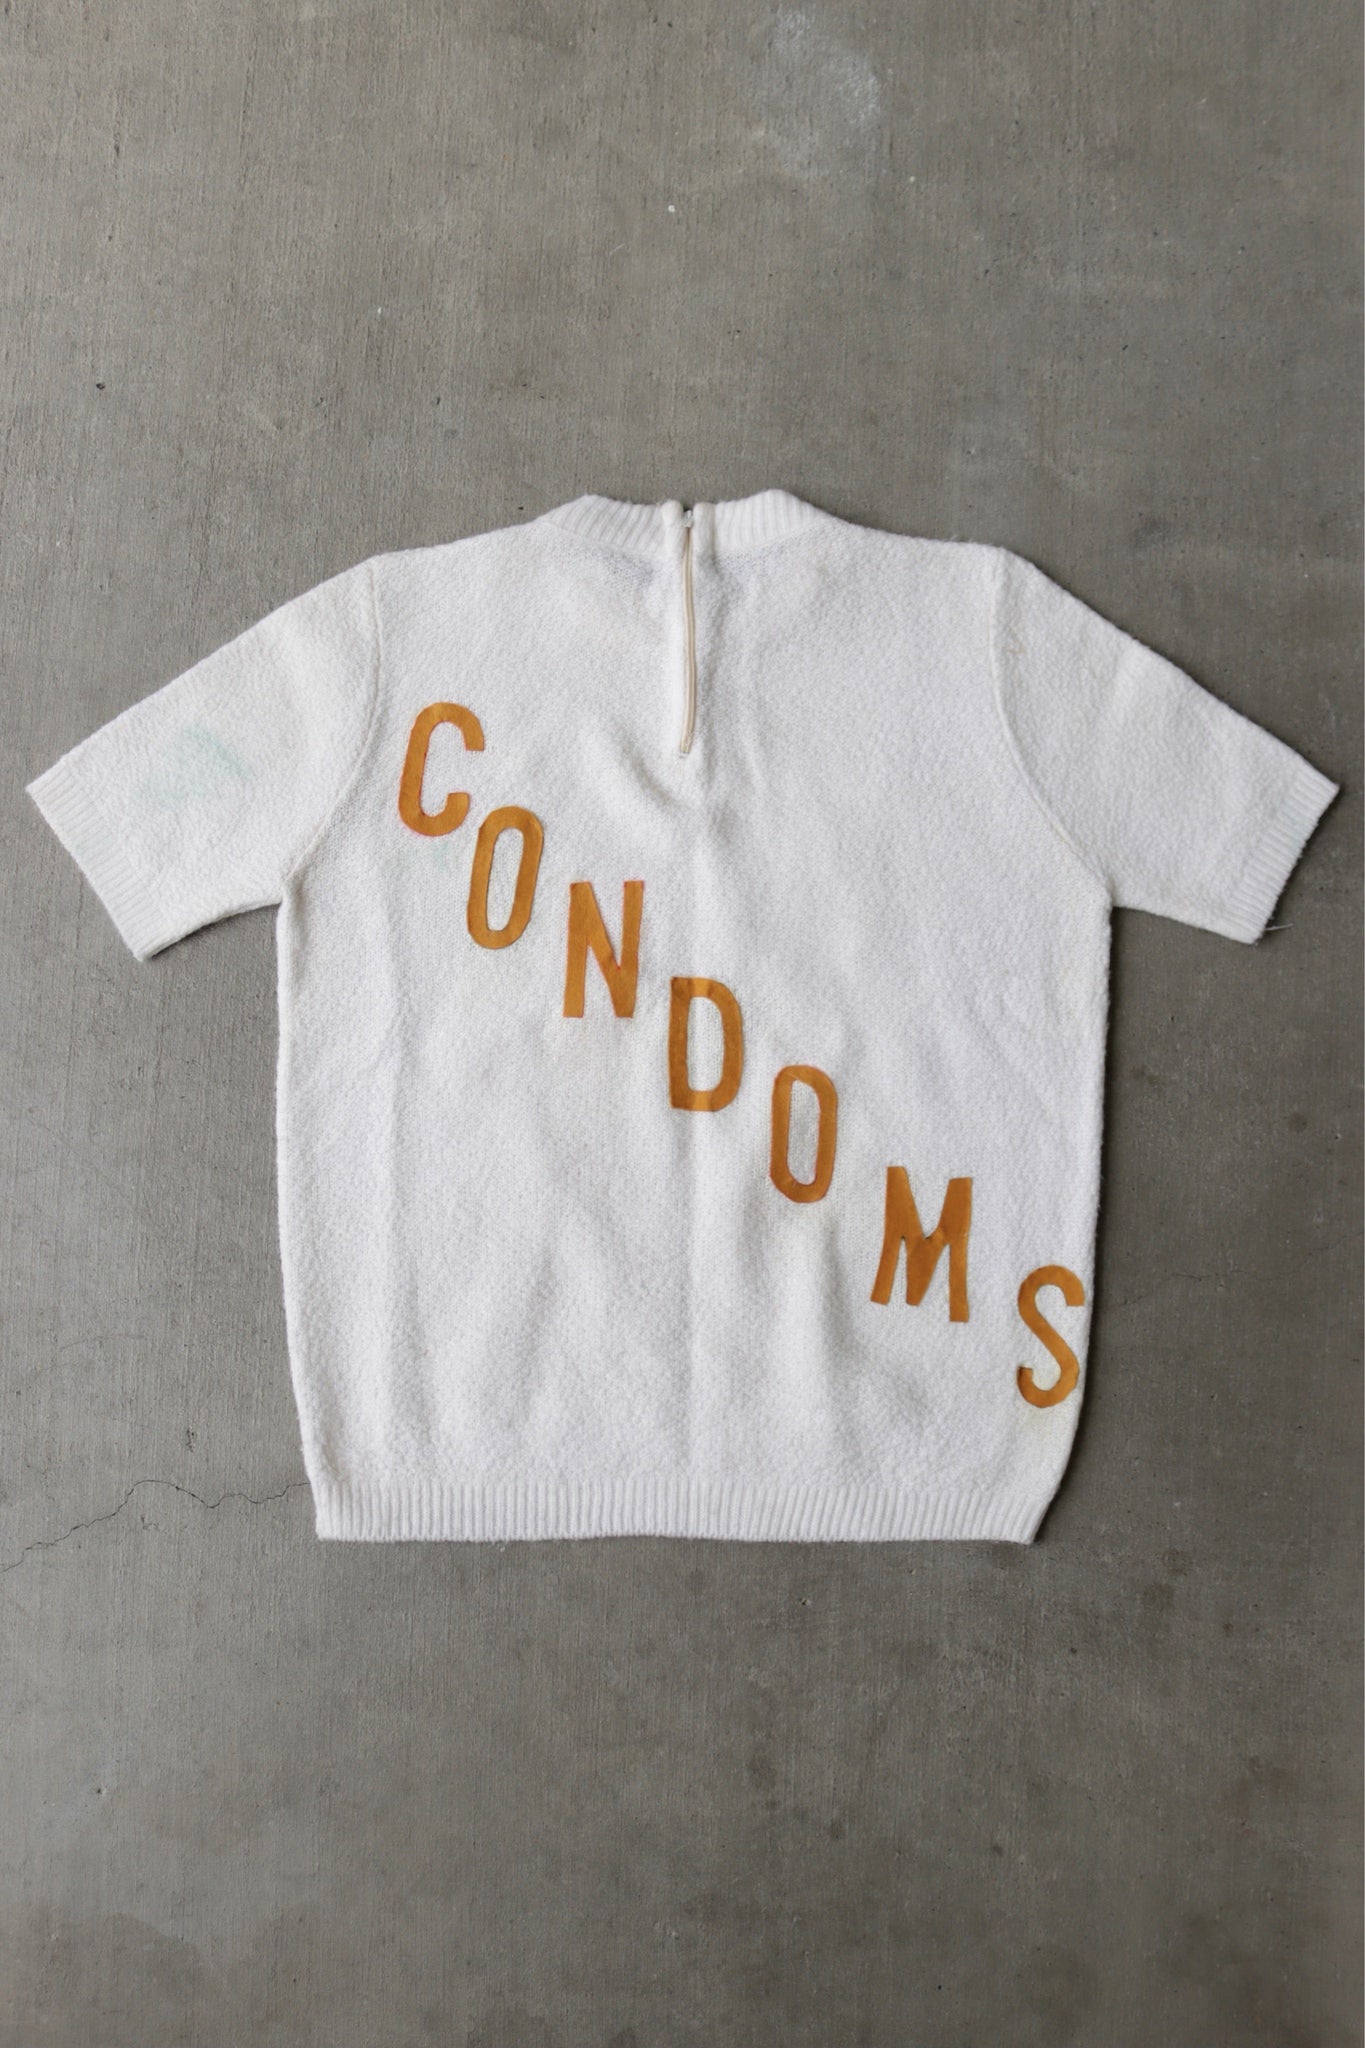 1960s Condoms VD College 3/4 Zip Knit Shirt - S